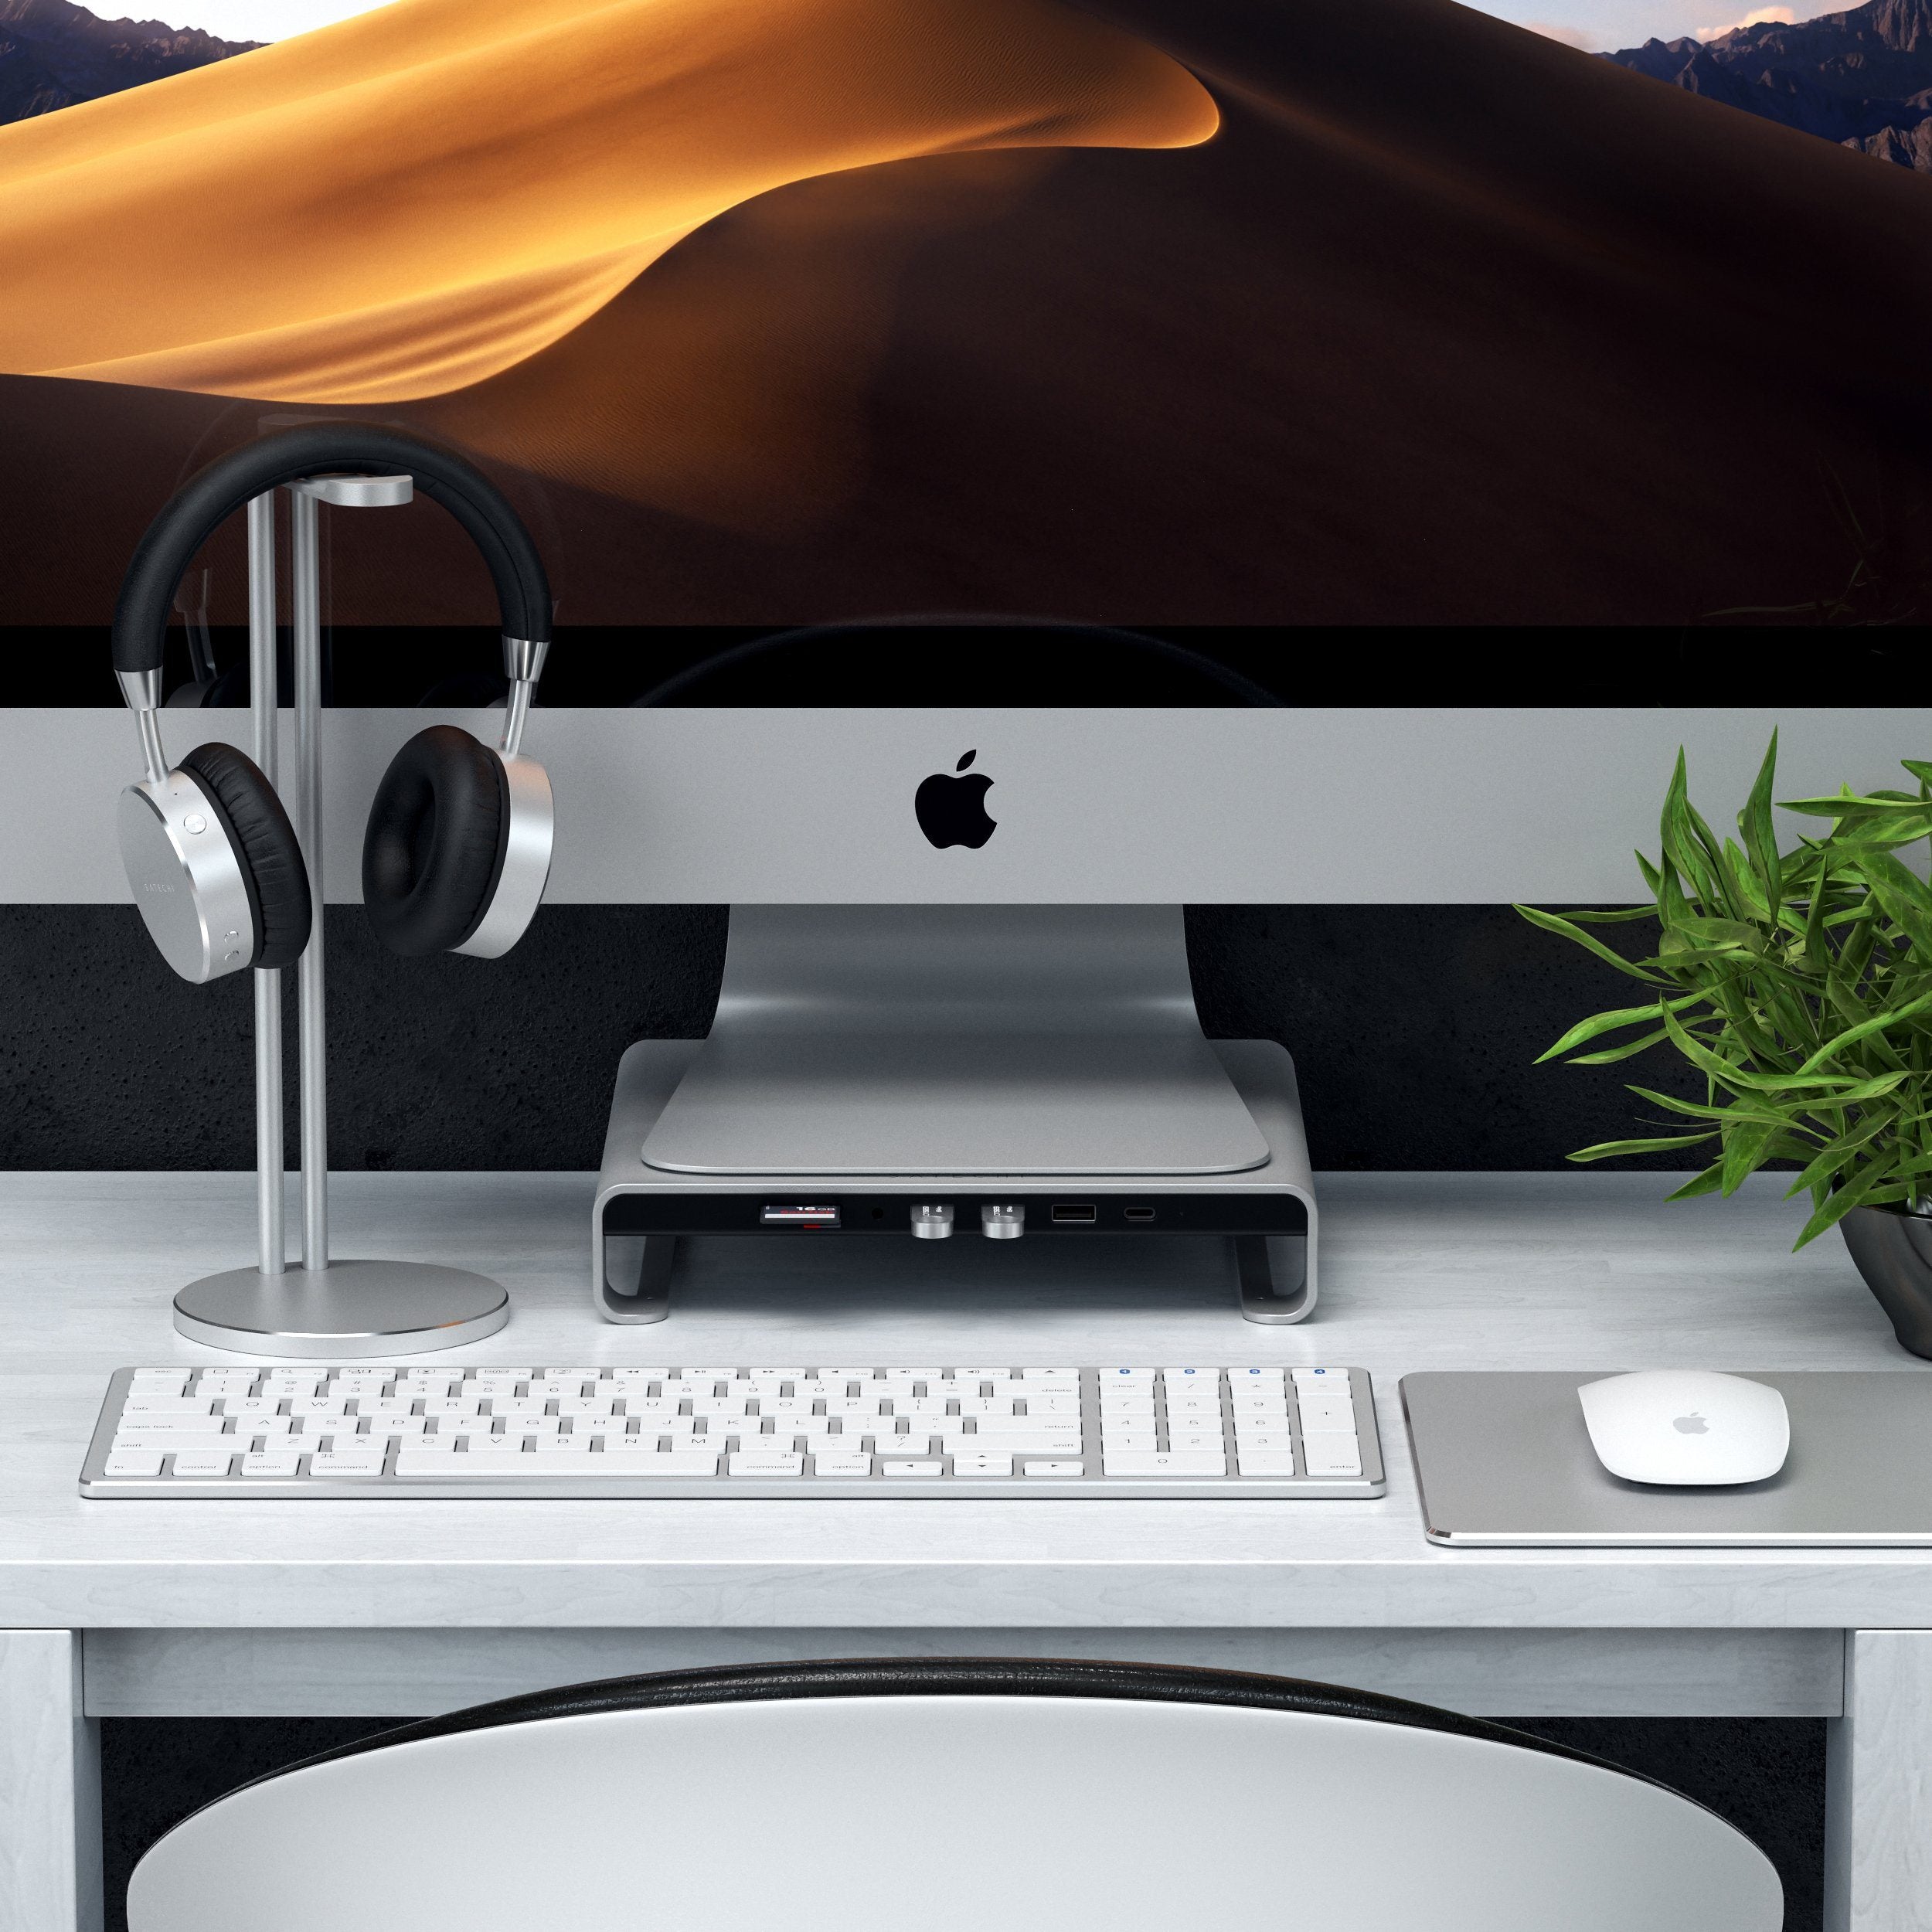 Satechi USB-C Clamp Hub for iMac 24 • Argent